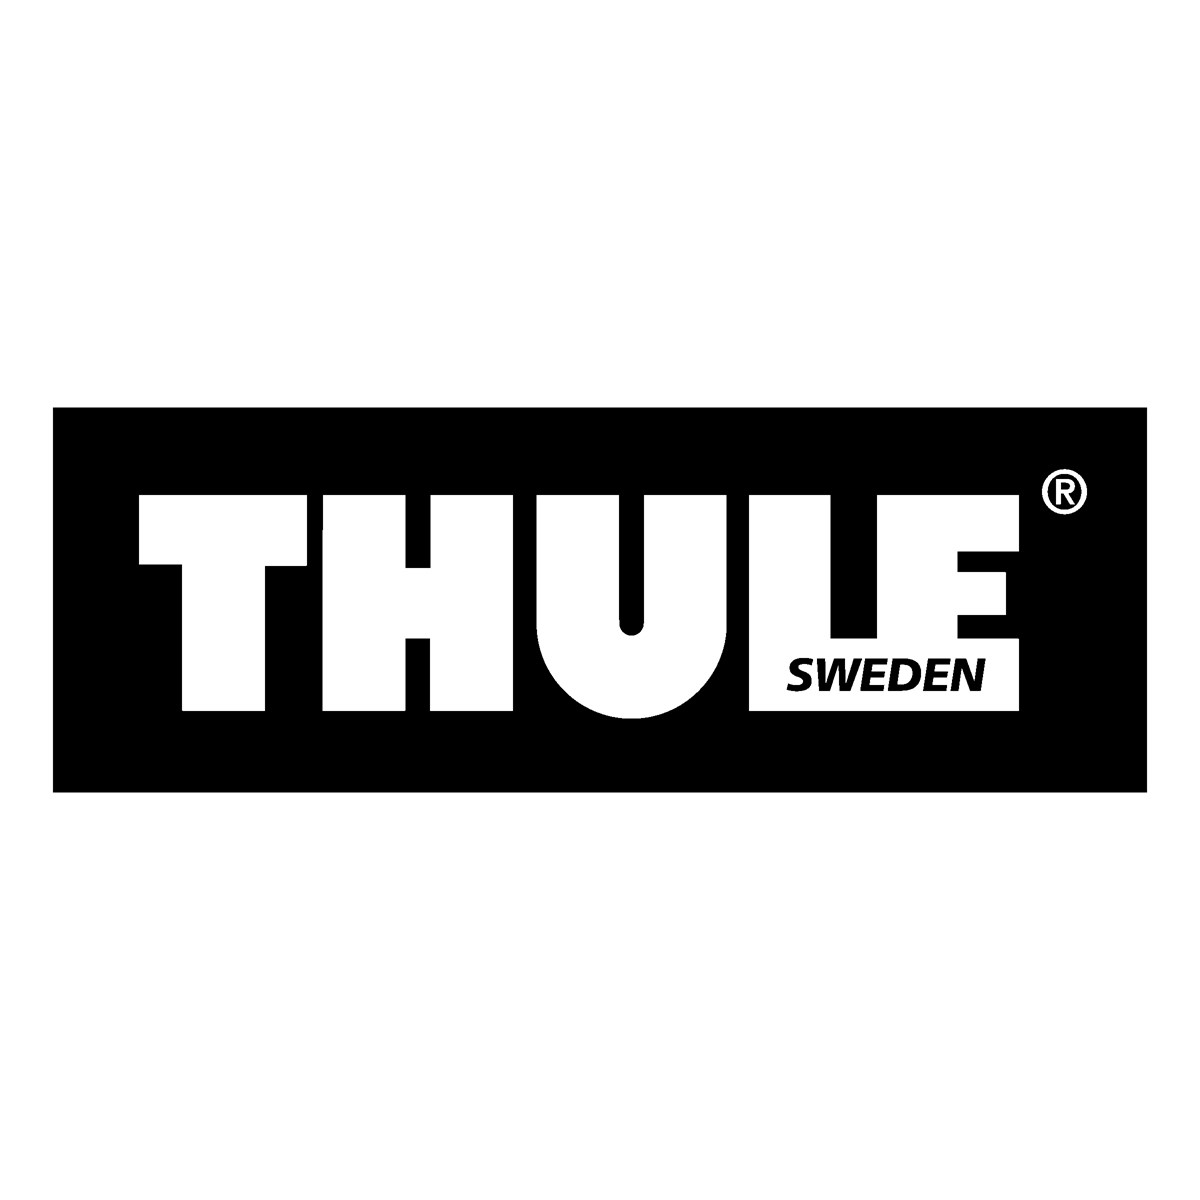 Haul More Gear: Thule Launches 'Caprock' Roof Platform